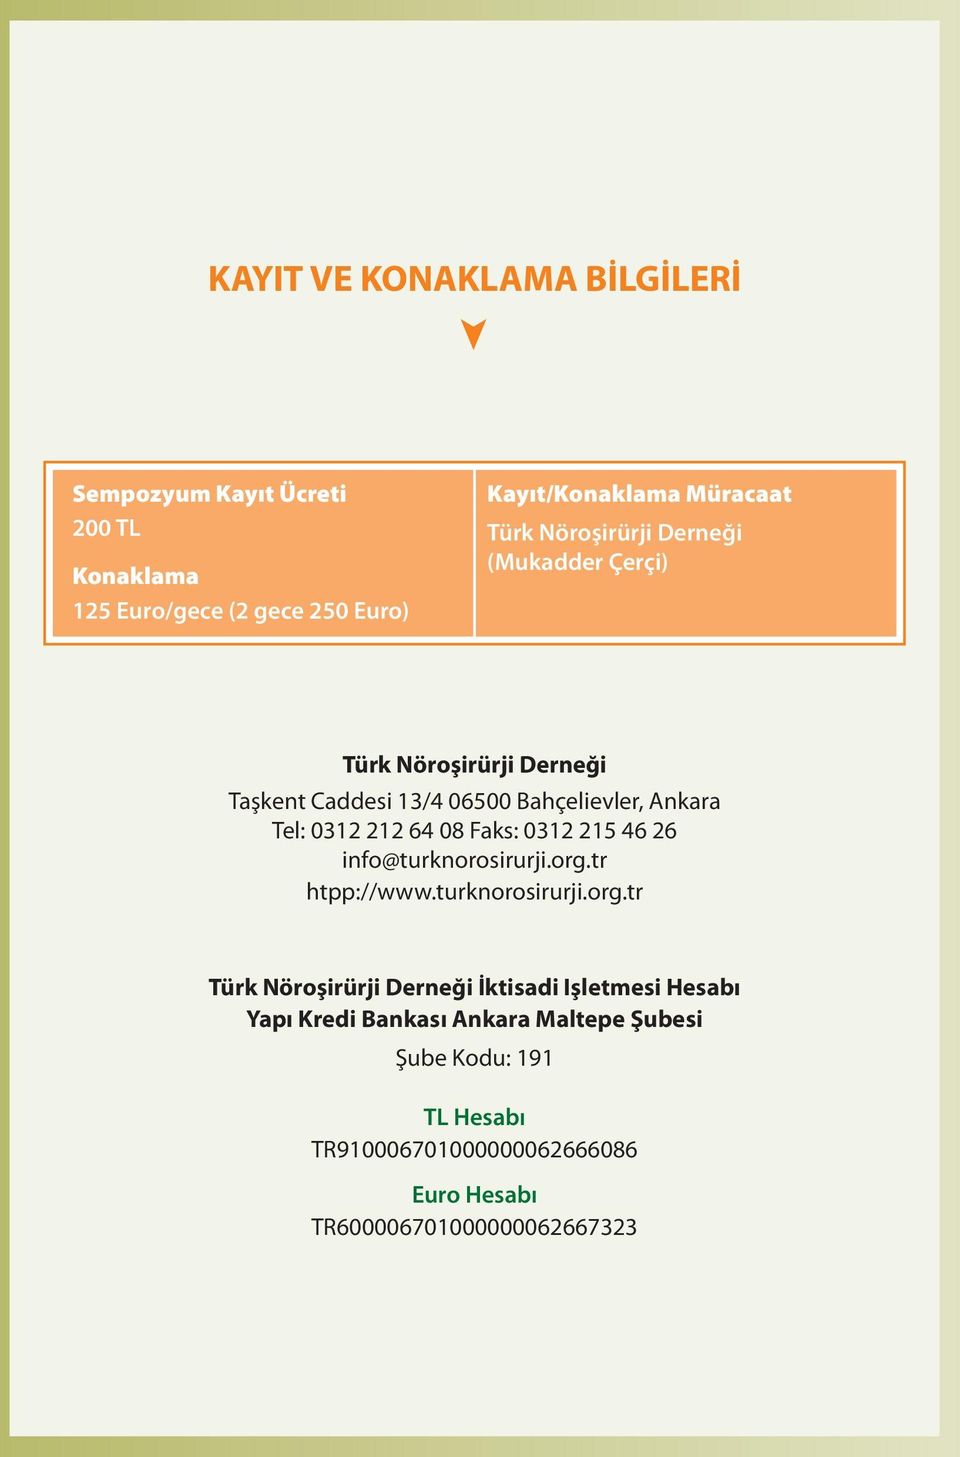 Faks: 0312 215 46 26 info@turknorosirurji.org.